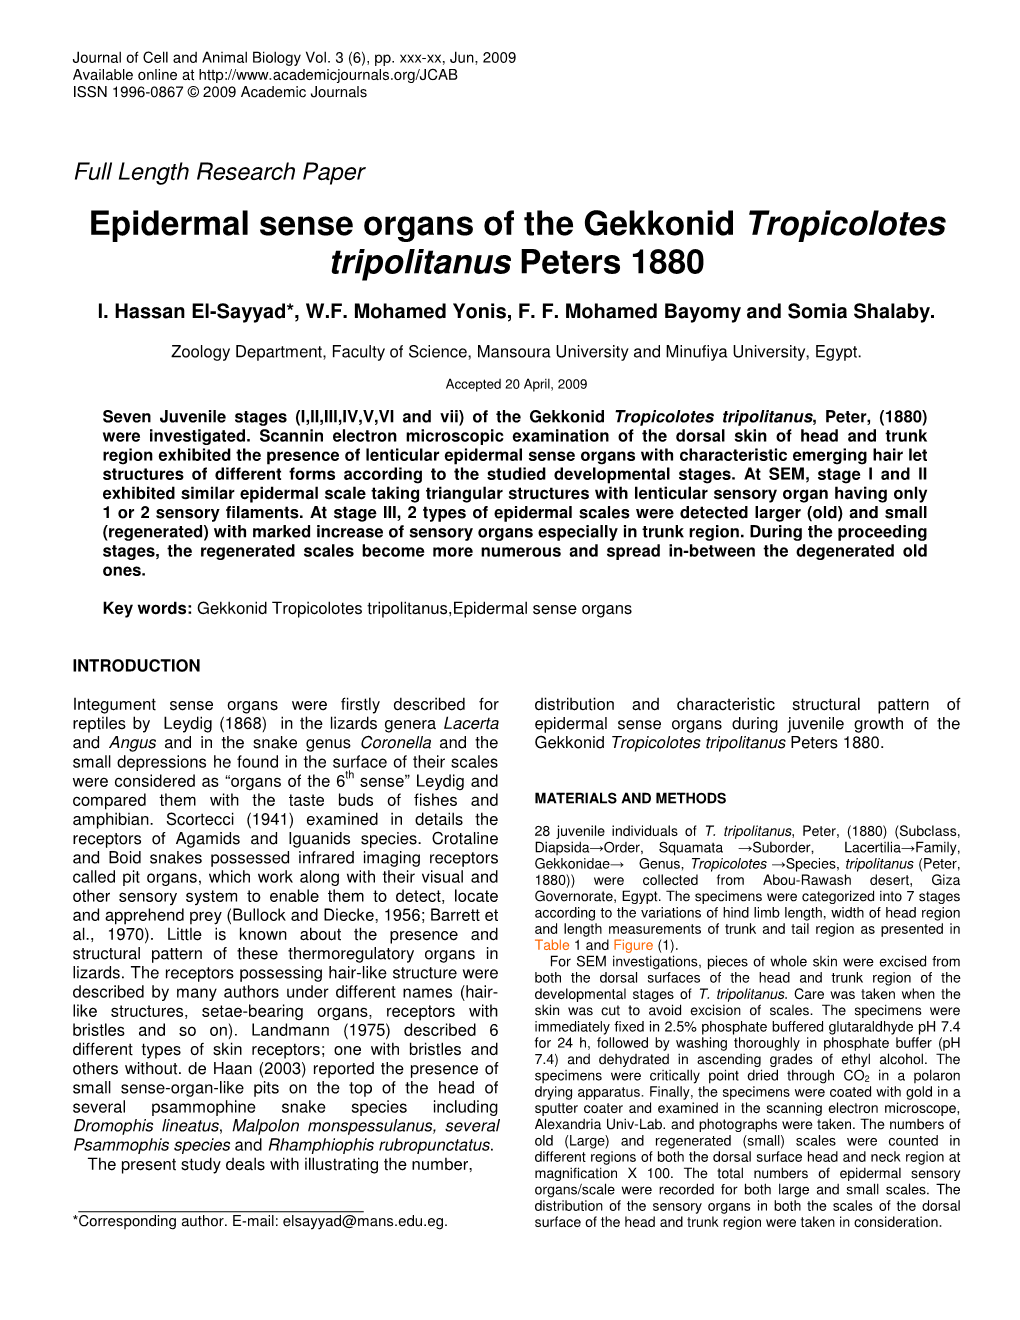 Epidermal Sense Organs of the Gekkonid Tropicolotes Tripolitanus Peters 1880